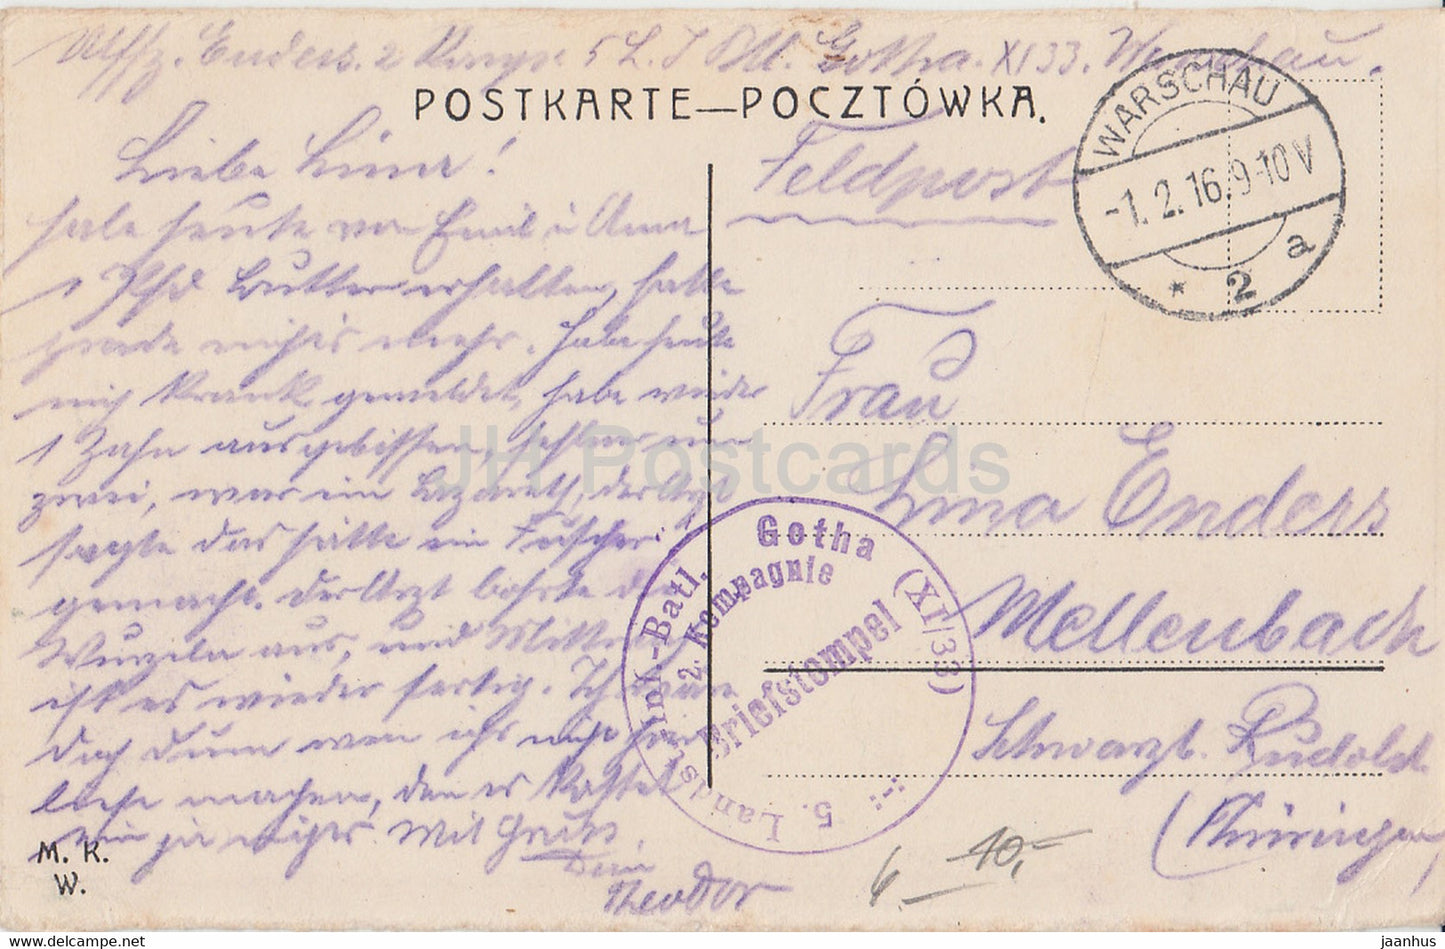 Warszawa - Warschau - Reichsbank - Bank Panstwa - Landstl Inf Batl Gotha Feldpost - carte postale ancienne - 1916 - Pologne - utilisé